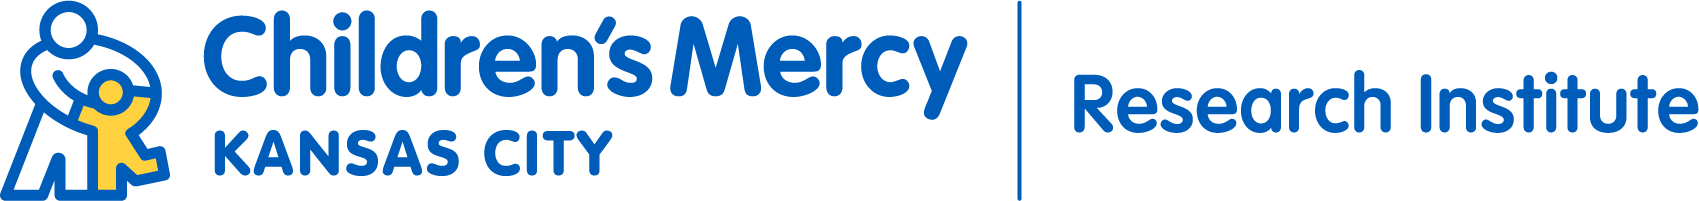 Children’s Mercy Research Institute